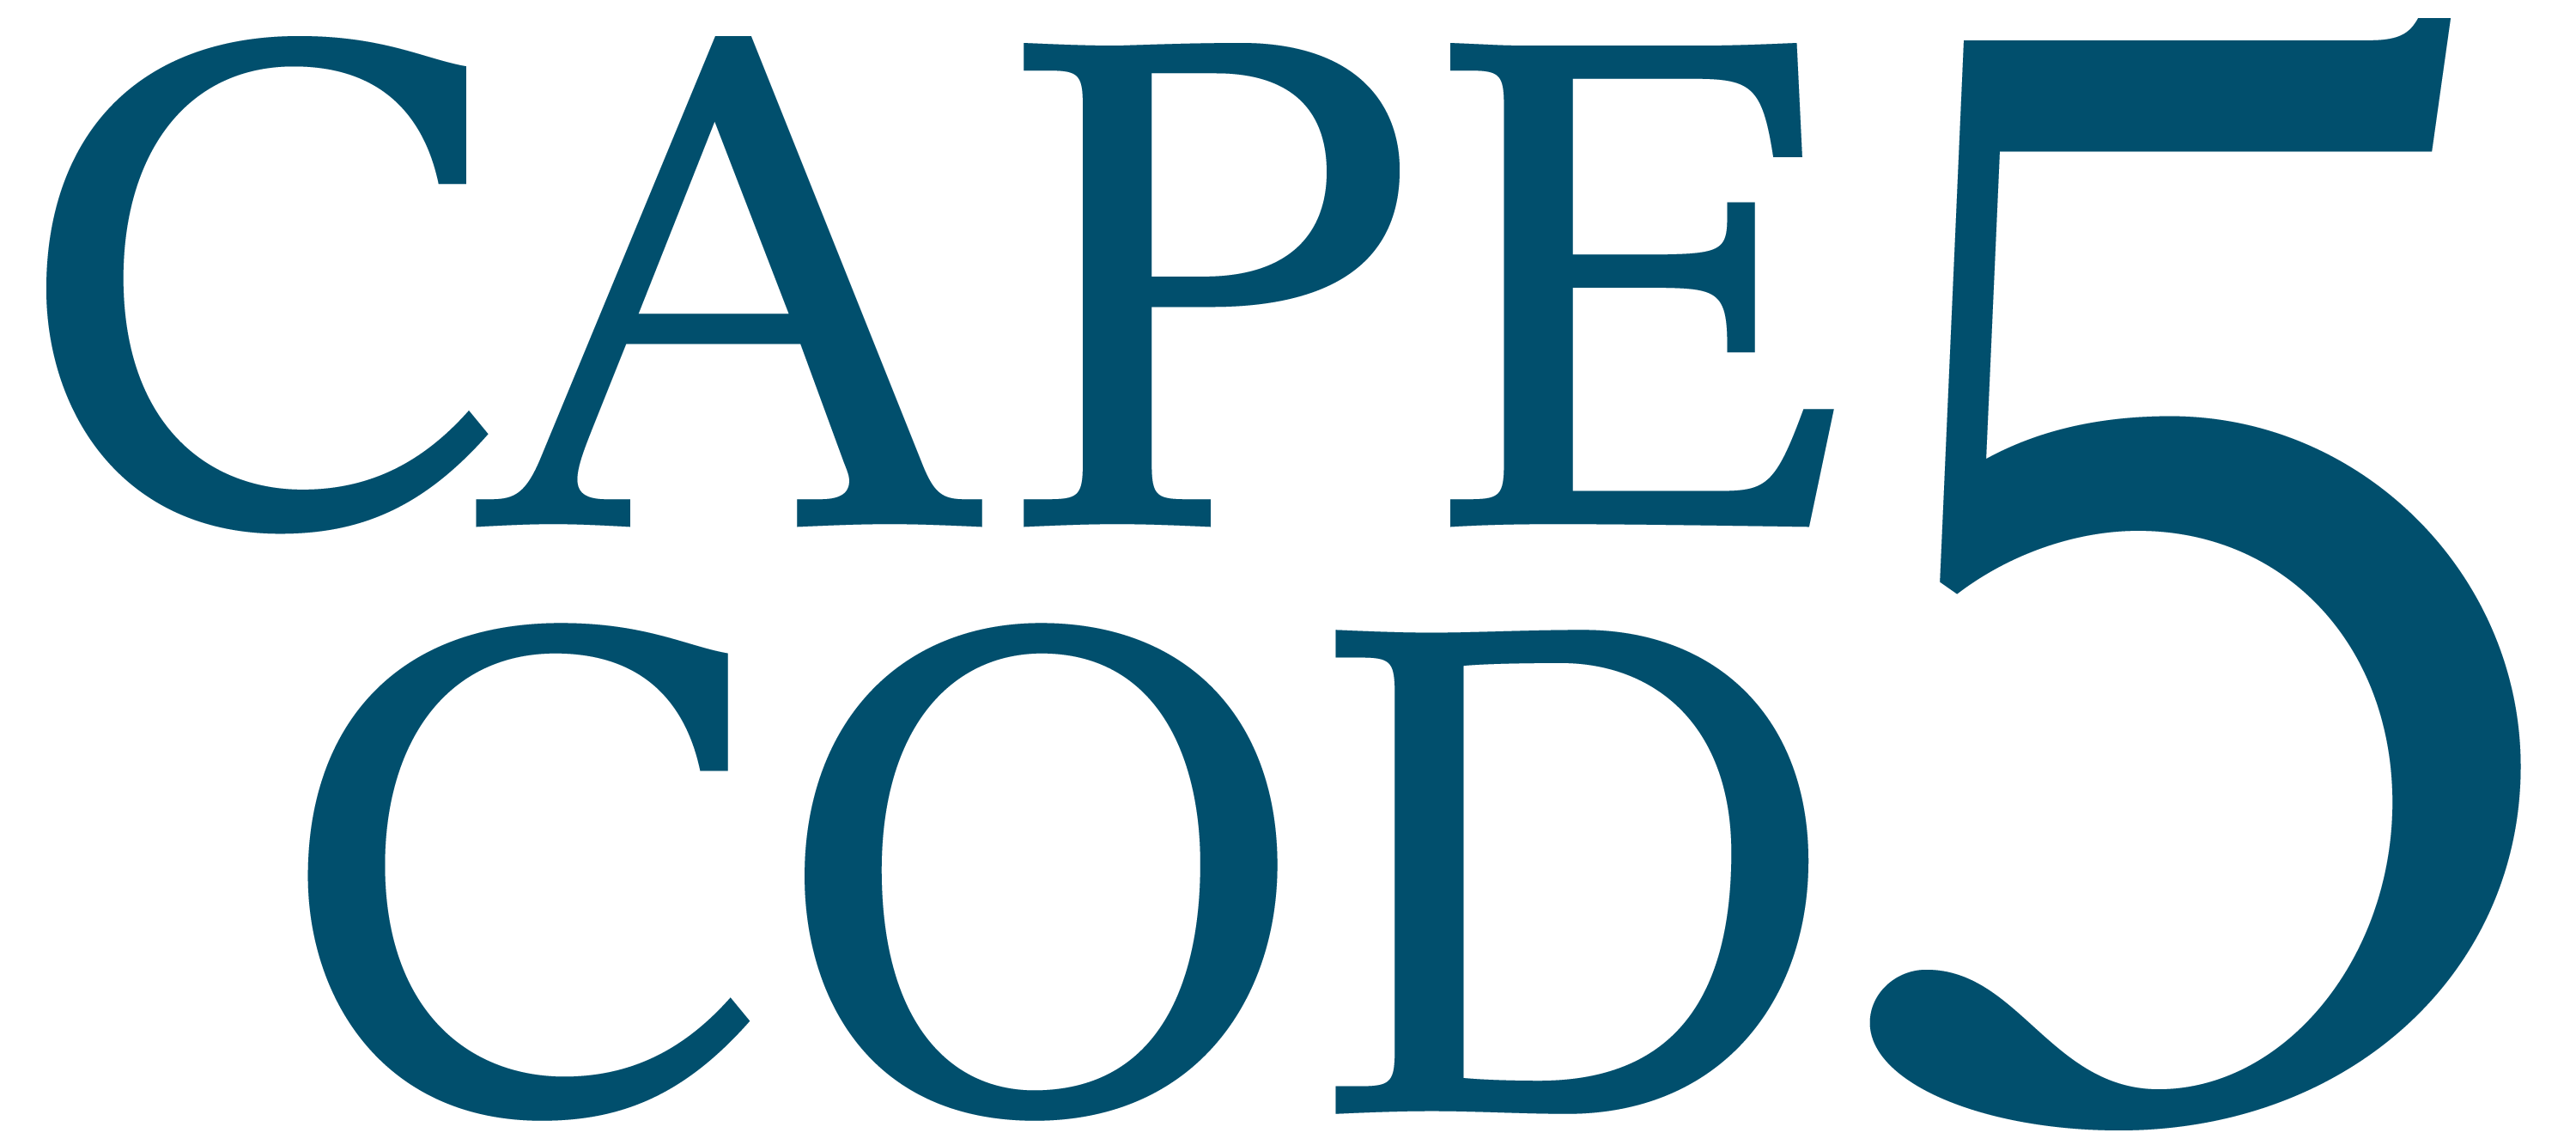 cape cod five online banking